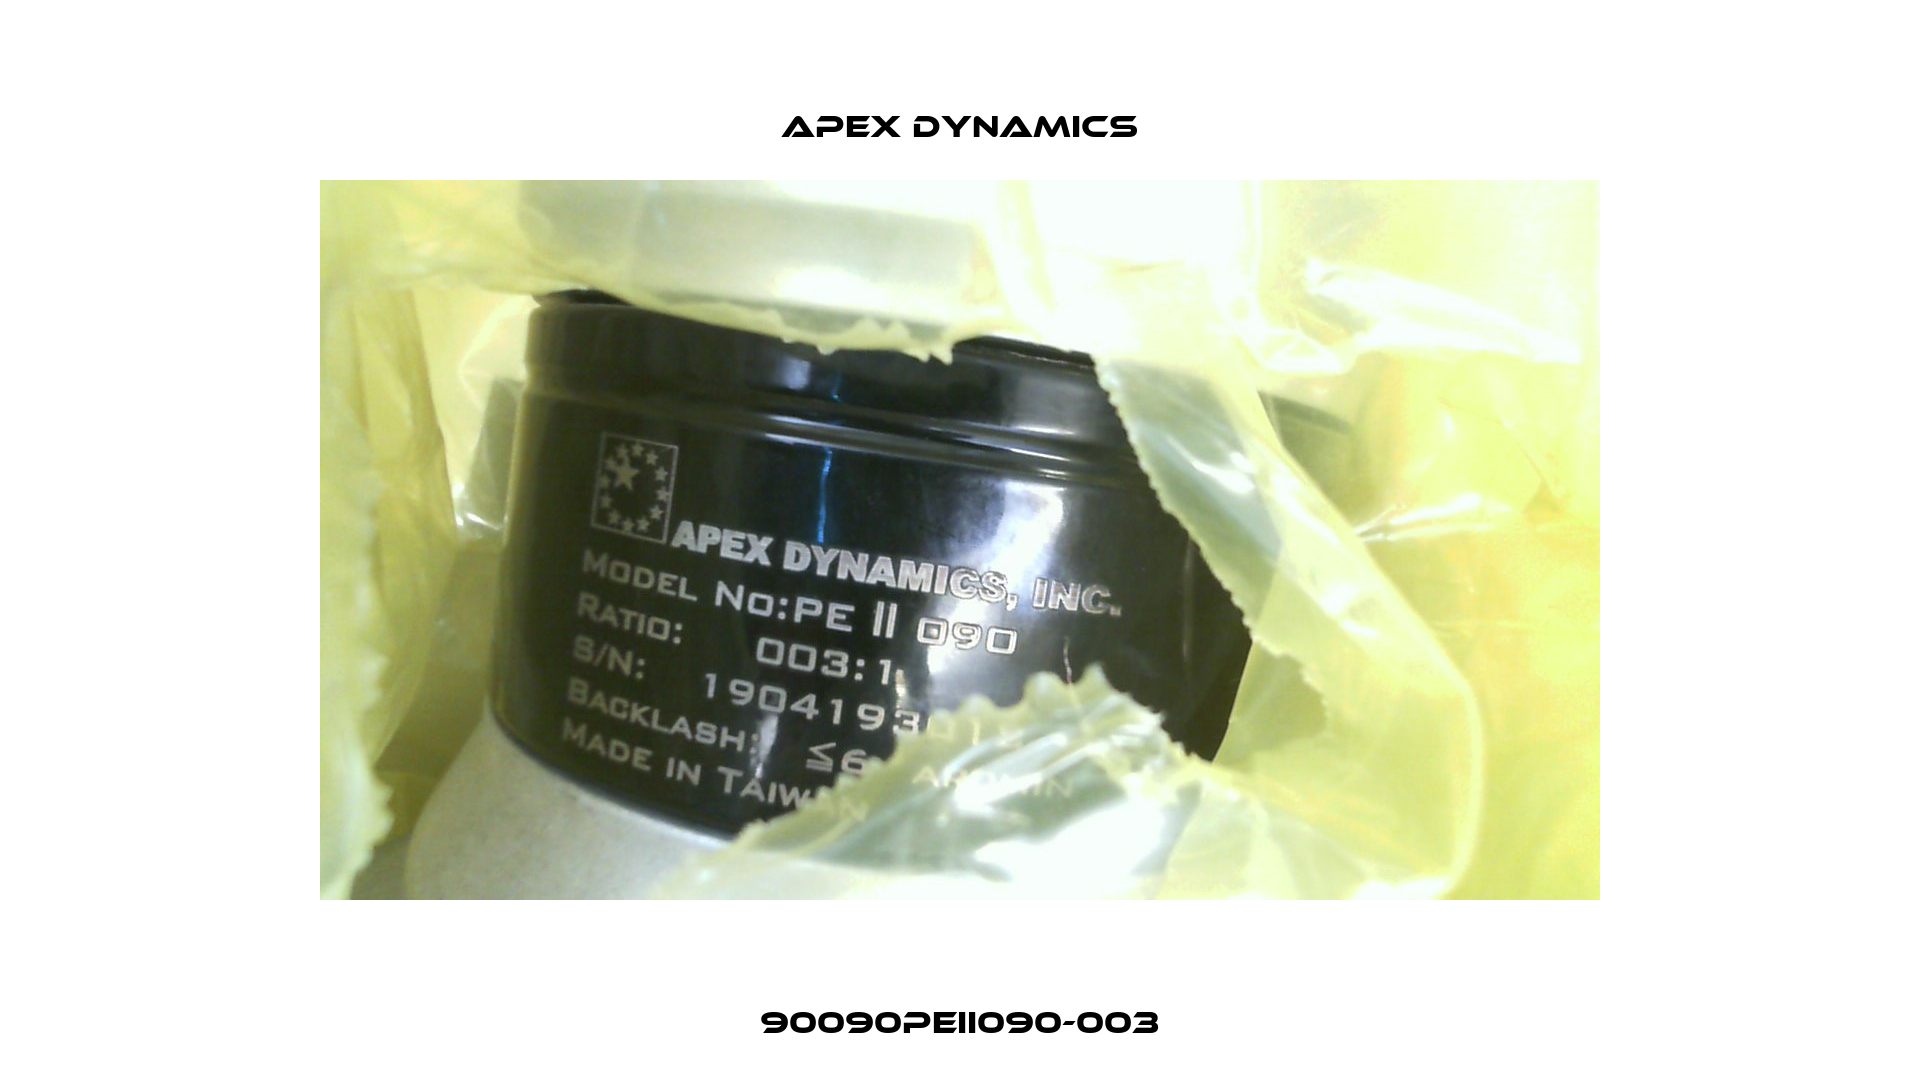 90090PEII090-003 Apex Dynamics